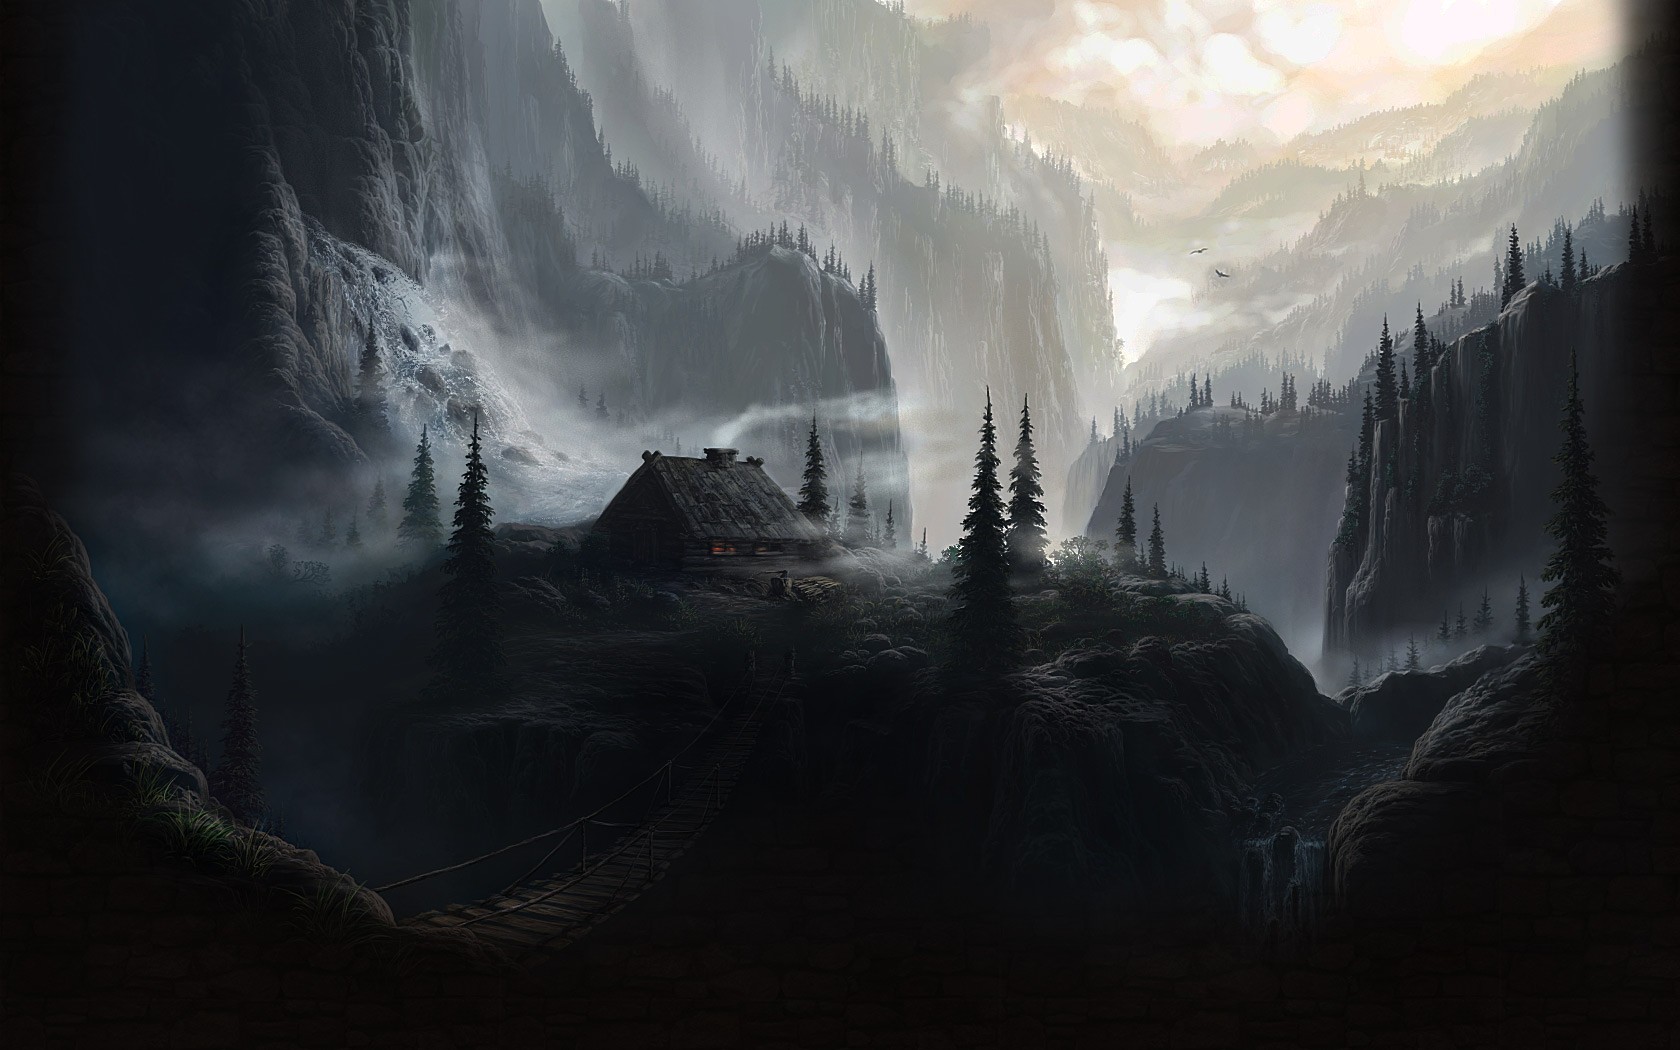 General 1680x1050 nature cabin mountains mist fantasy art forest DeviantArt waterfall digital art low light